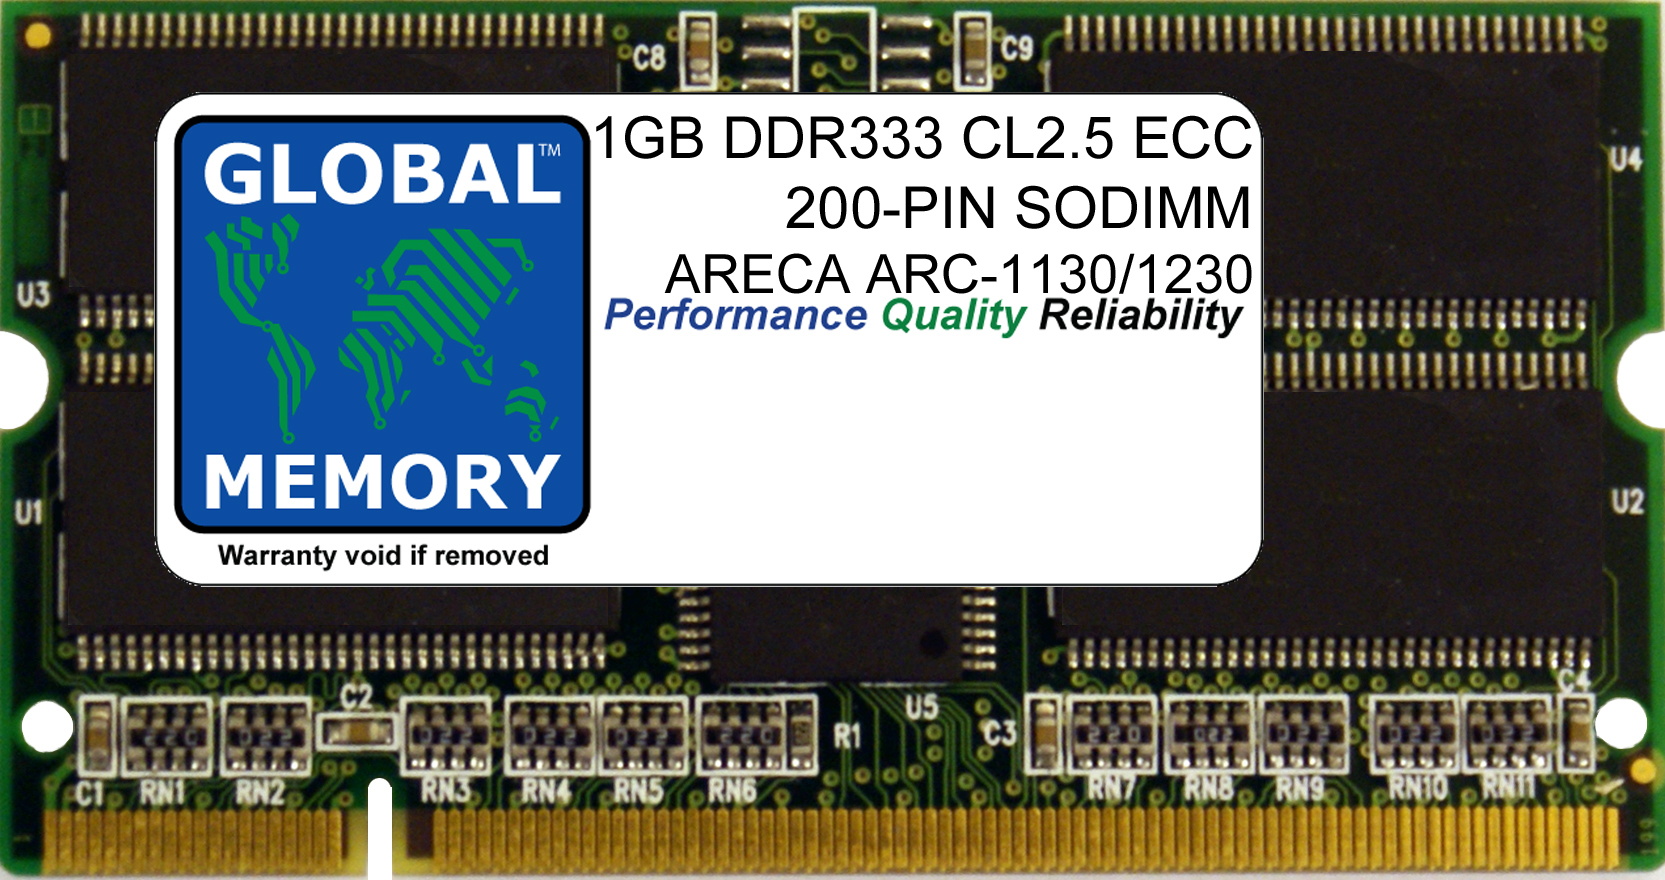 1GB DDR2 533MHz PC2-4200 240-PIN ECC DIMM (UDIMM) MEMORY RAM FOR SUN SERVERS/WORKSTATIONS